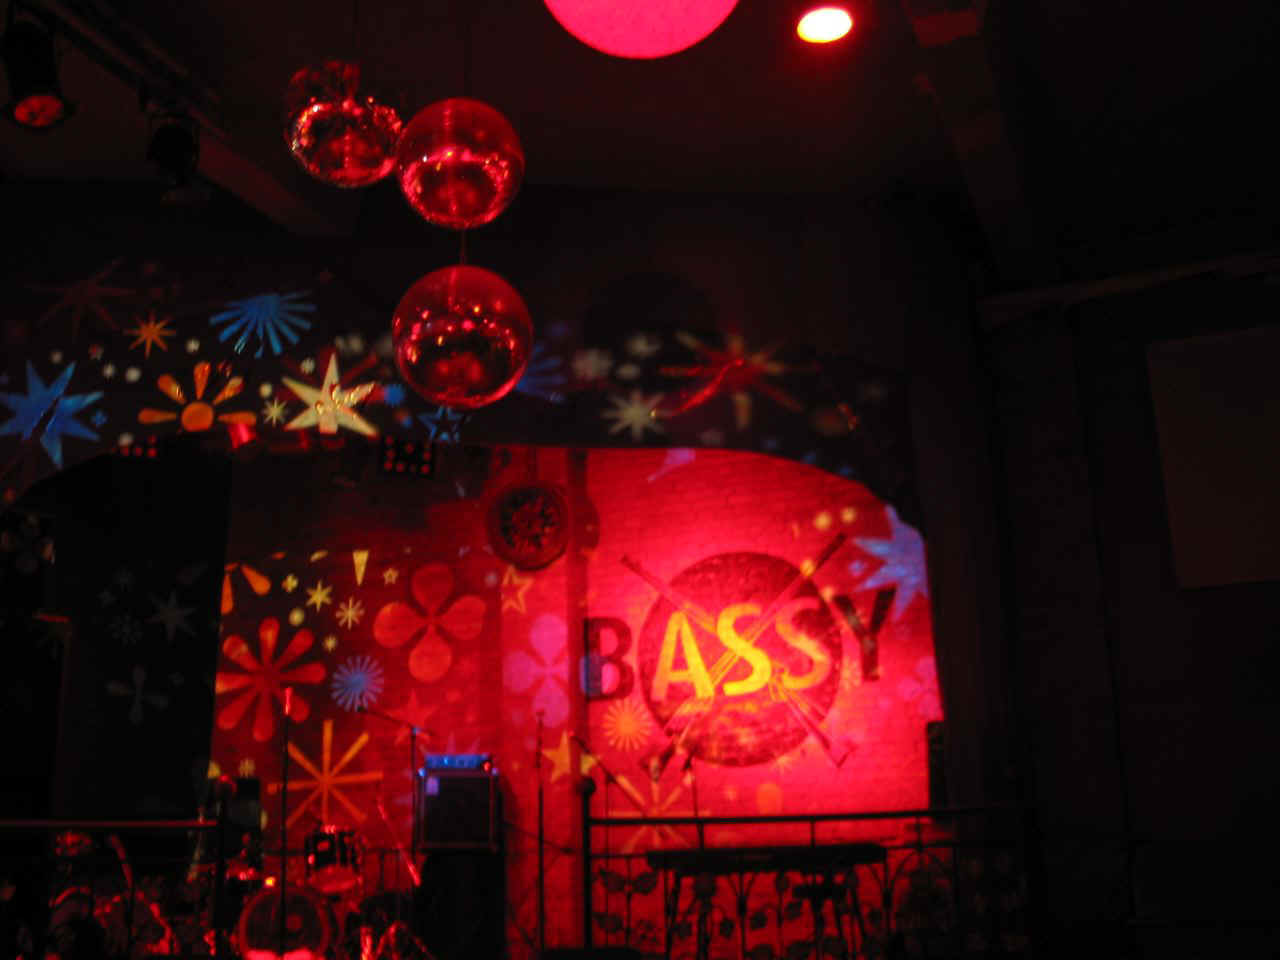 Fatal Shore live @ Bassy Club, Berlin, 25.10.2007, photos by Gaby Lüffe